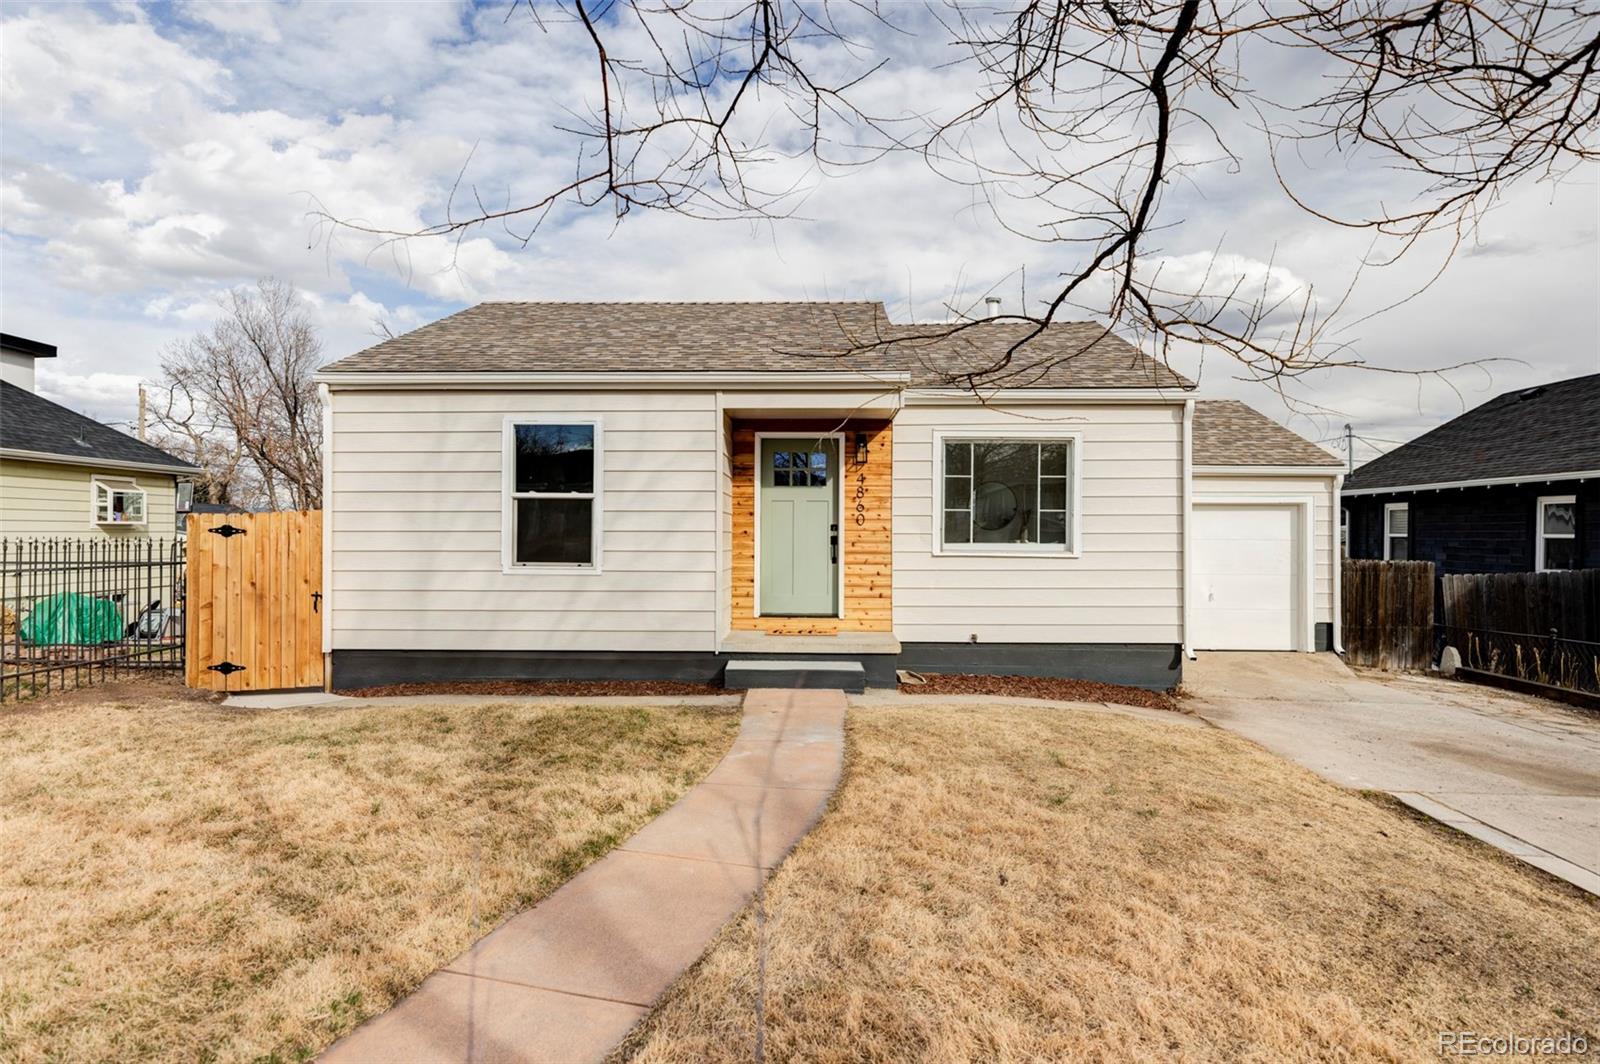 4860  zuni street, Denver sold home. Closed on 2024-03-29 for $680,000.